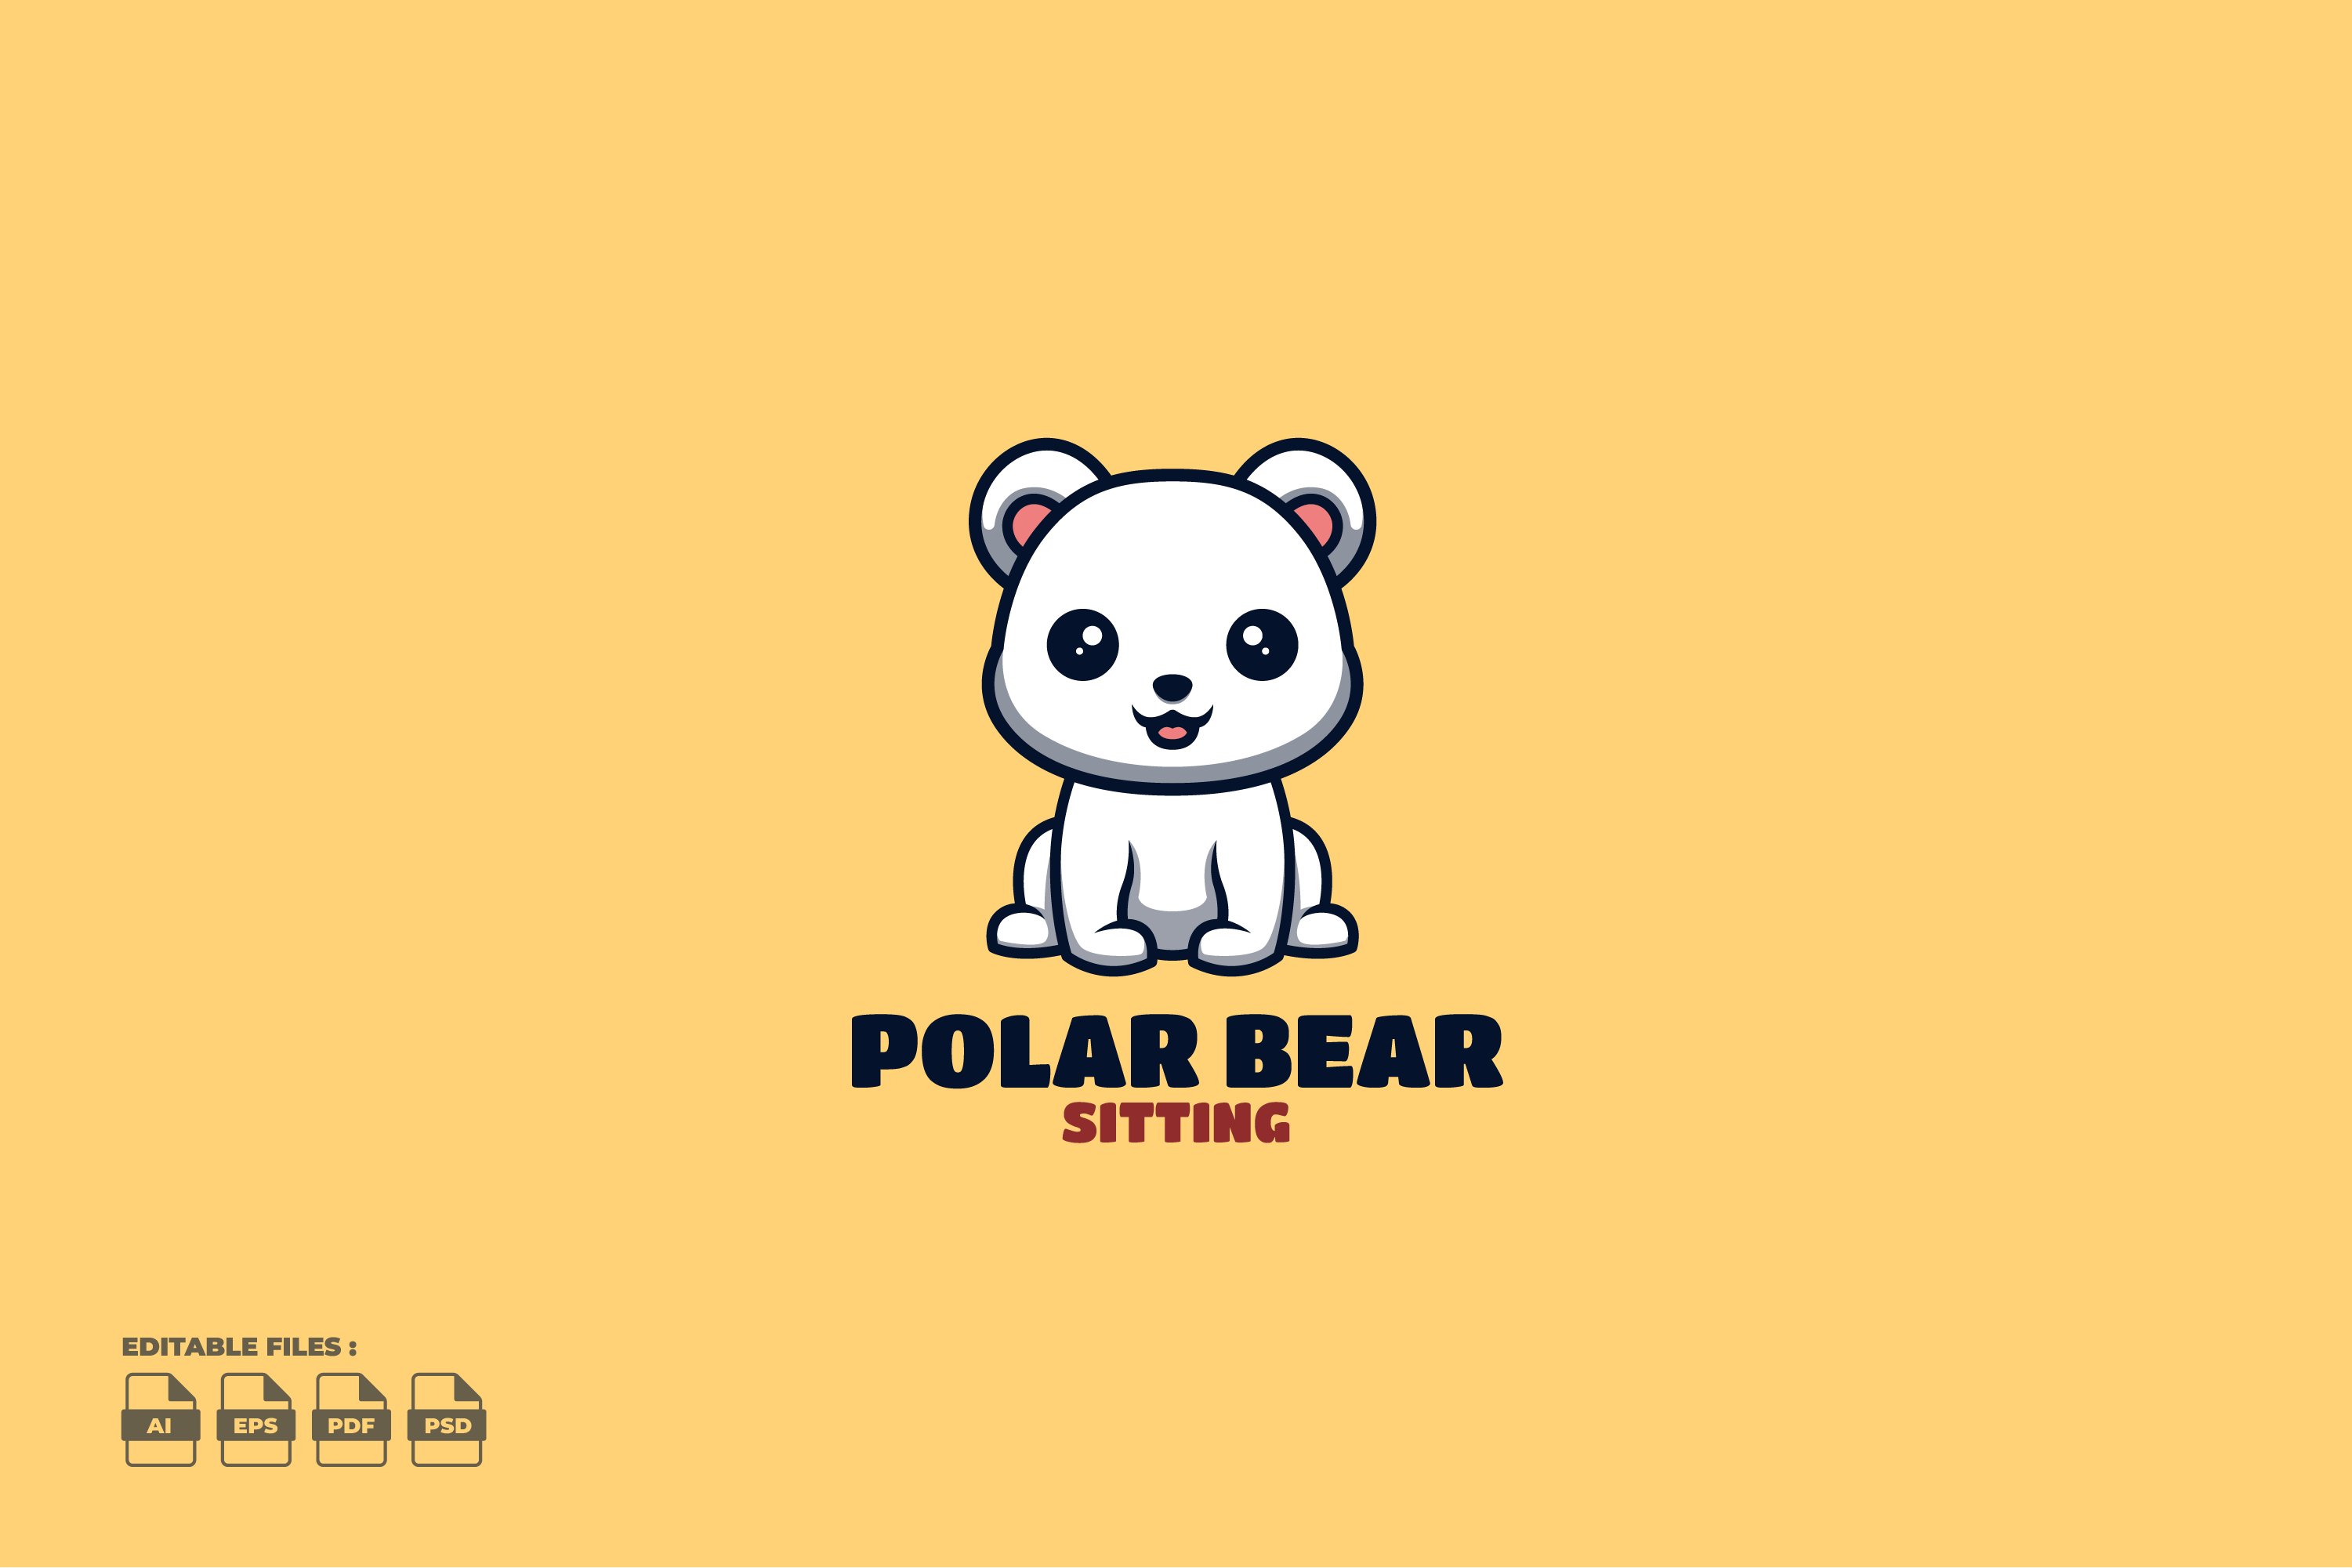 Sitting Polar Bear Cute Mascot Logo cover image.